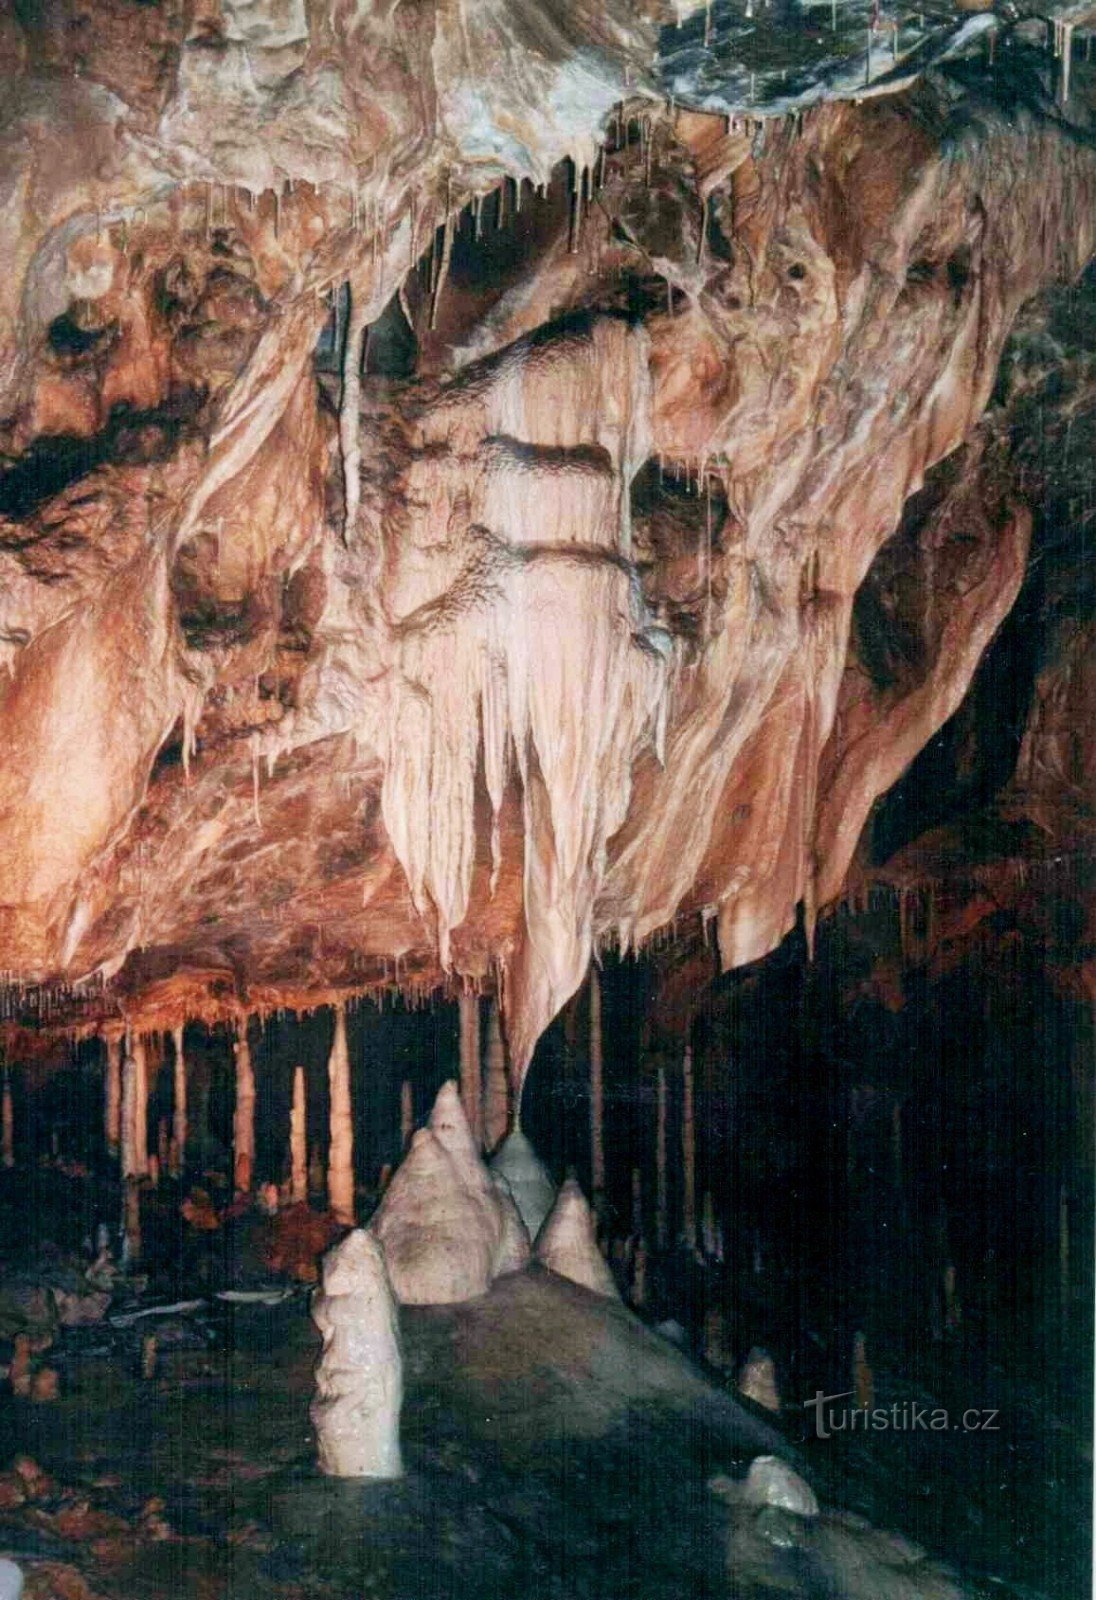 Pećine Javoříč